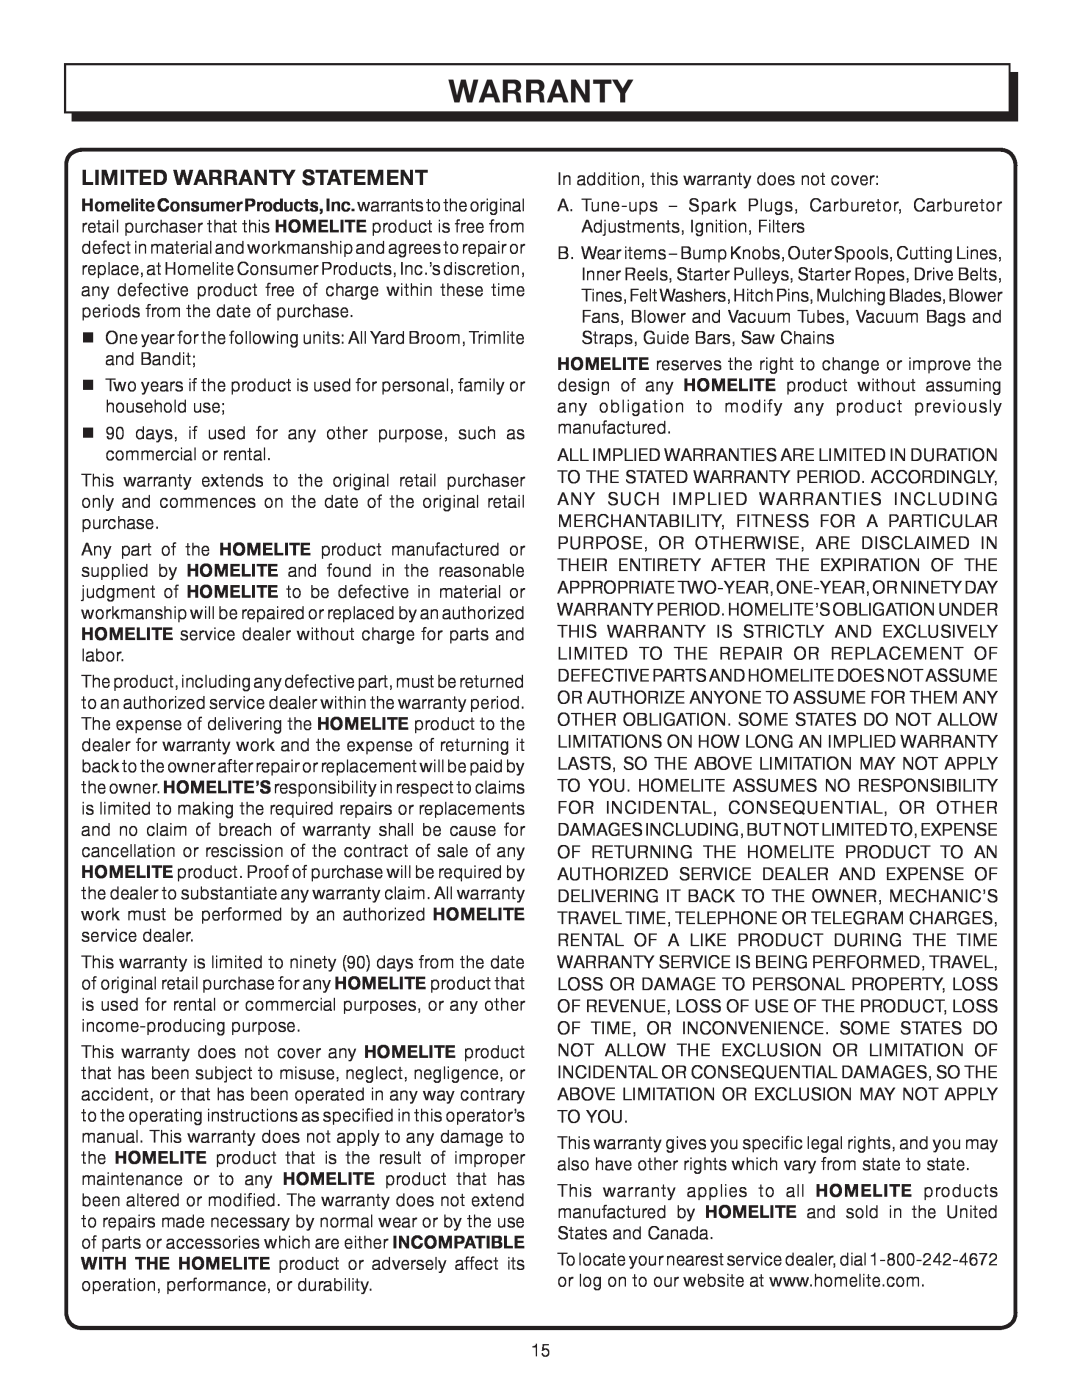 Homelite UT08572A manual Limited Warranty Statement 